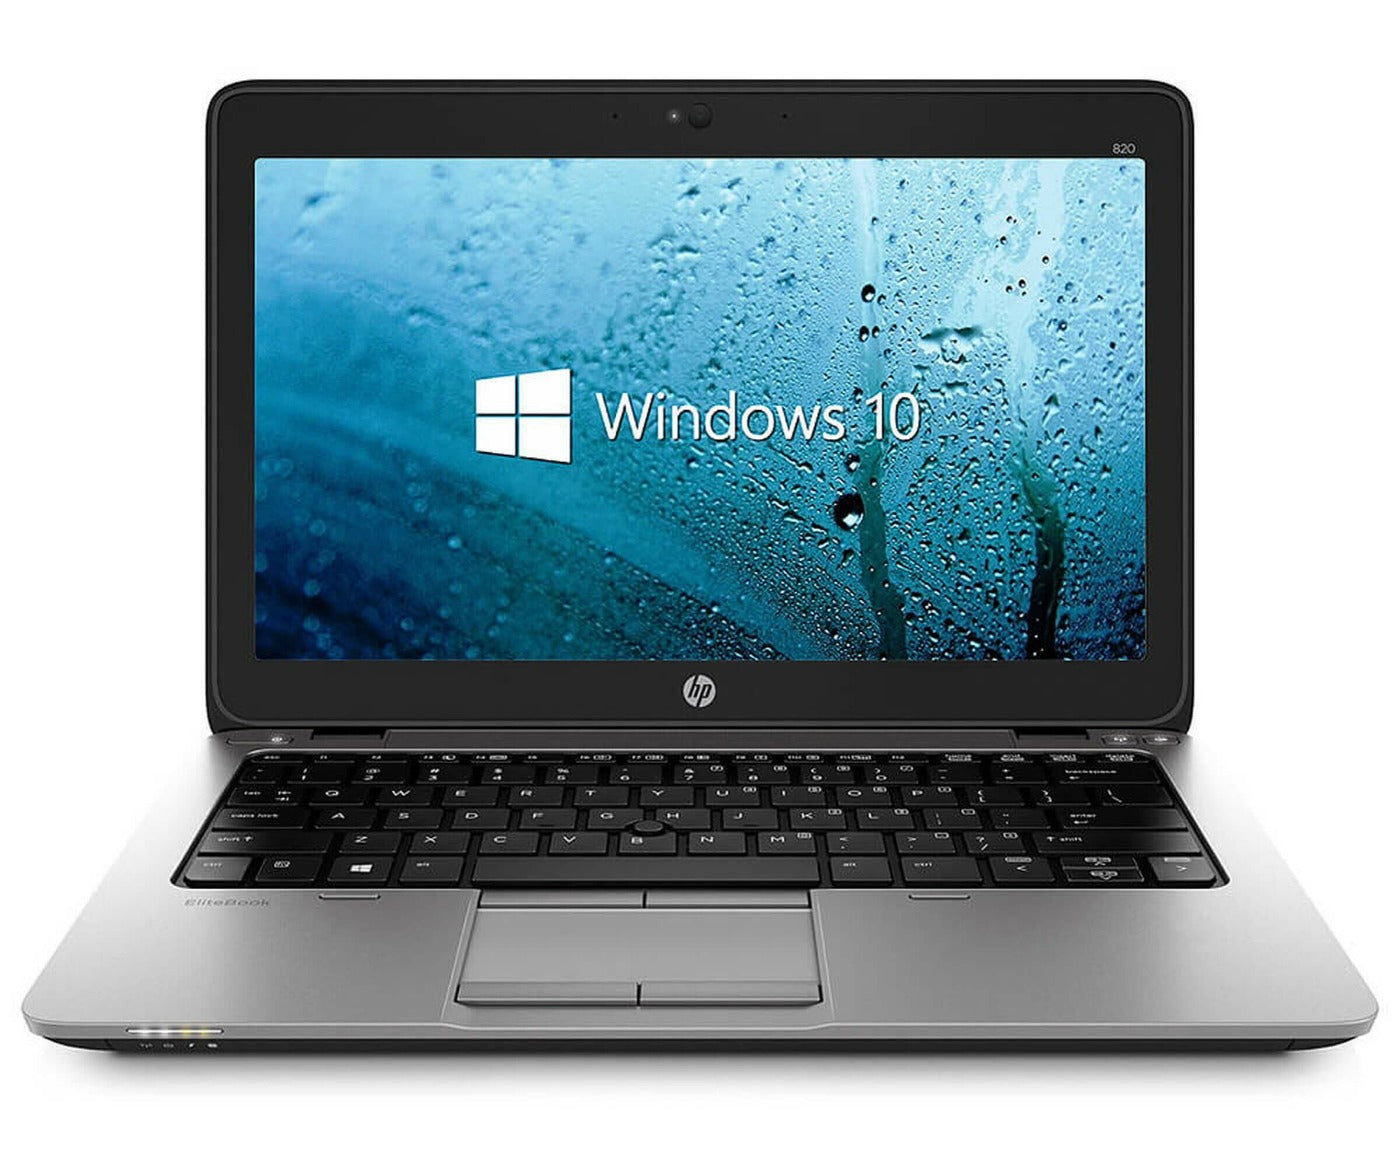 HP EliteBook 820 G2 12.5" Laptop, Intel Core i5, 8GB RAM, 256GB SSD, Win10 Pro. Refurbished